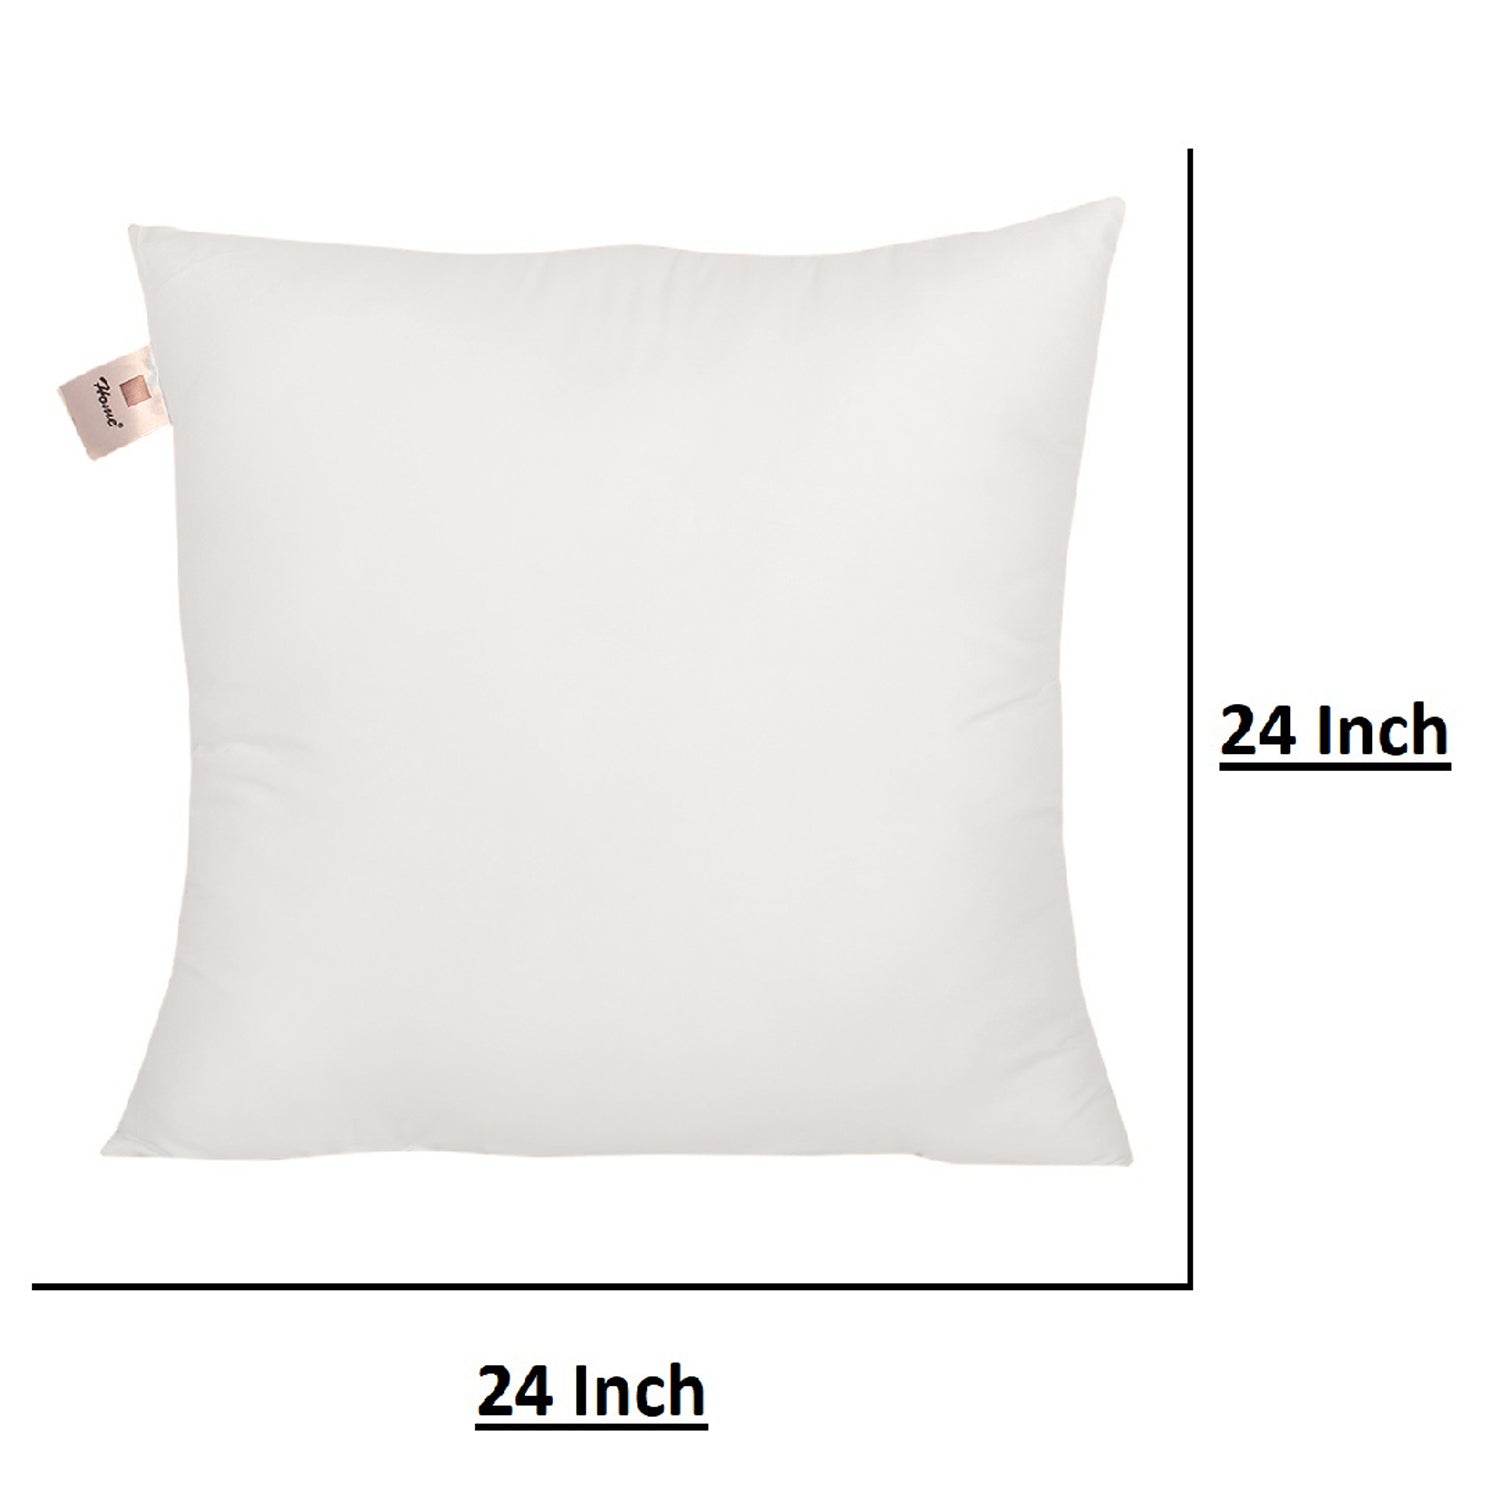 Micro Fiber Cushion Insert Extra Soft, White | 24x24 Inch